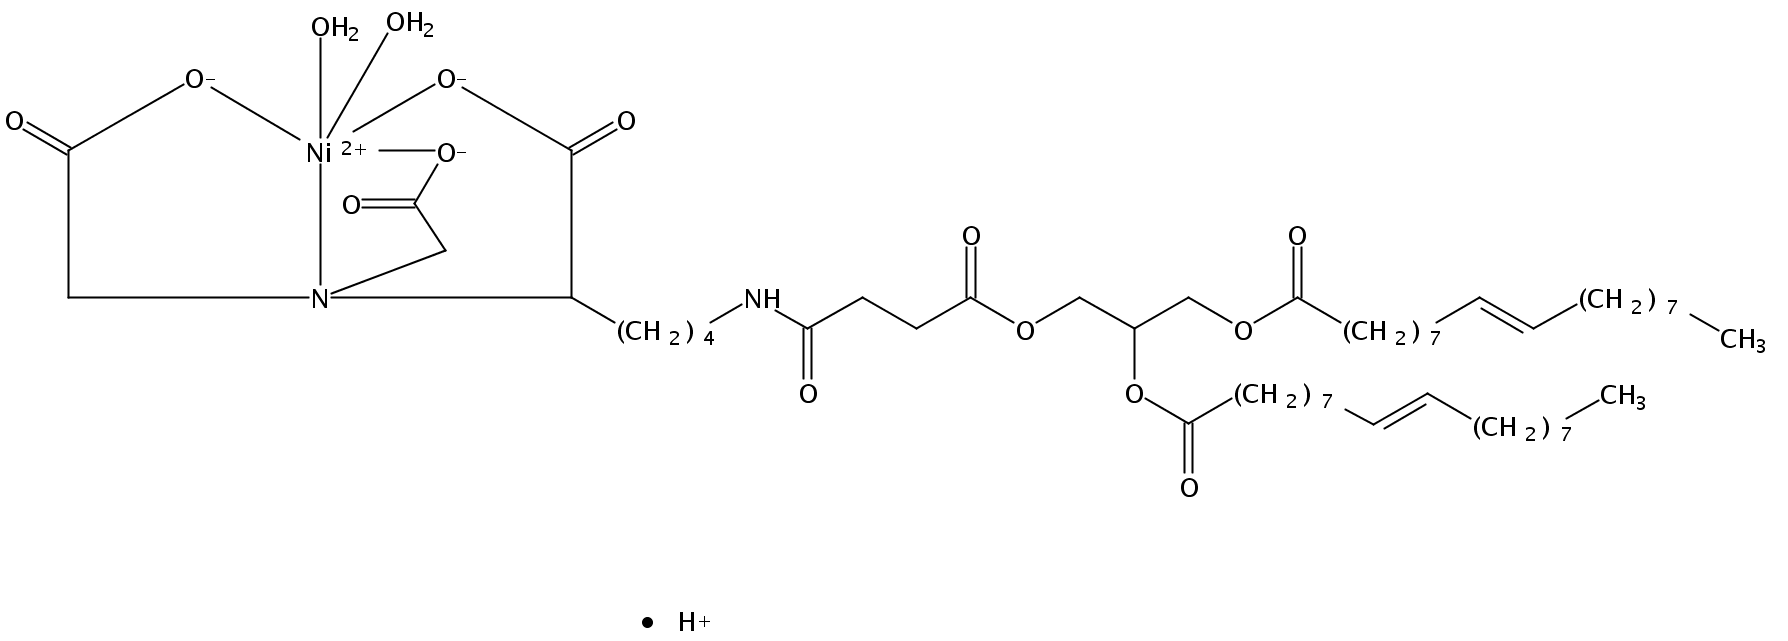 1,2-dioleoyl-sn-glycero-3-[(N-(5-amino-1-carboxypentyl)iminodiacetic acid)succinyl] (nickel salt)